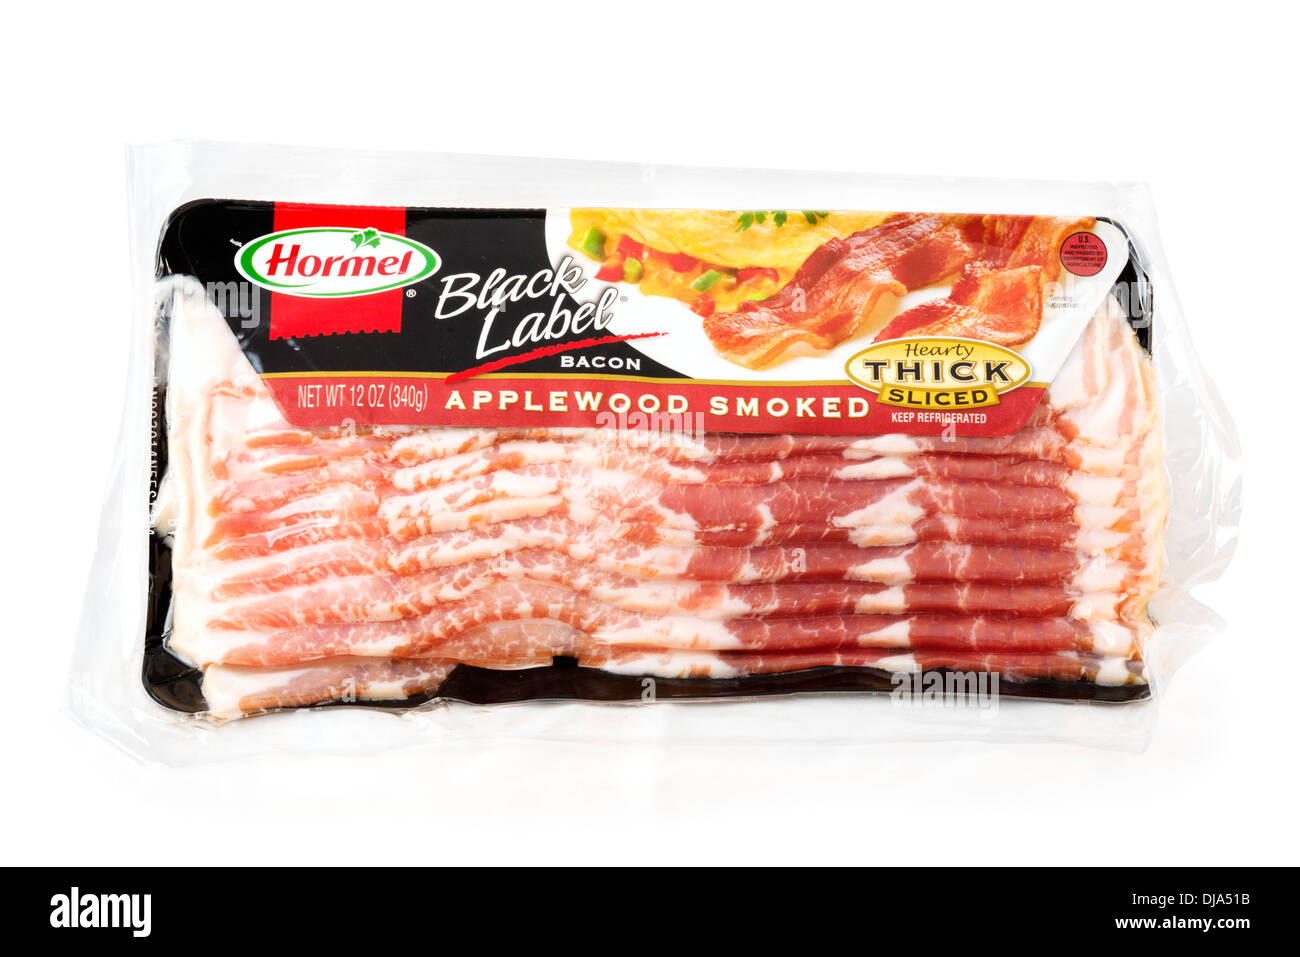 Packet of Hormel Black Label Applewood Smoked Bacon, USA Stock Photo